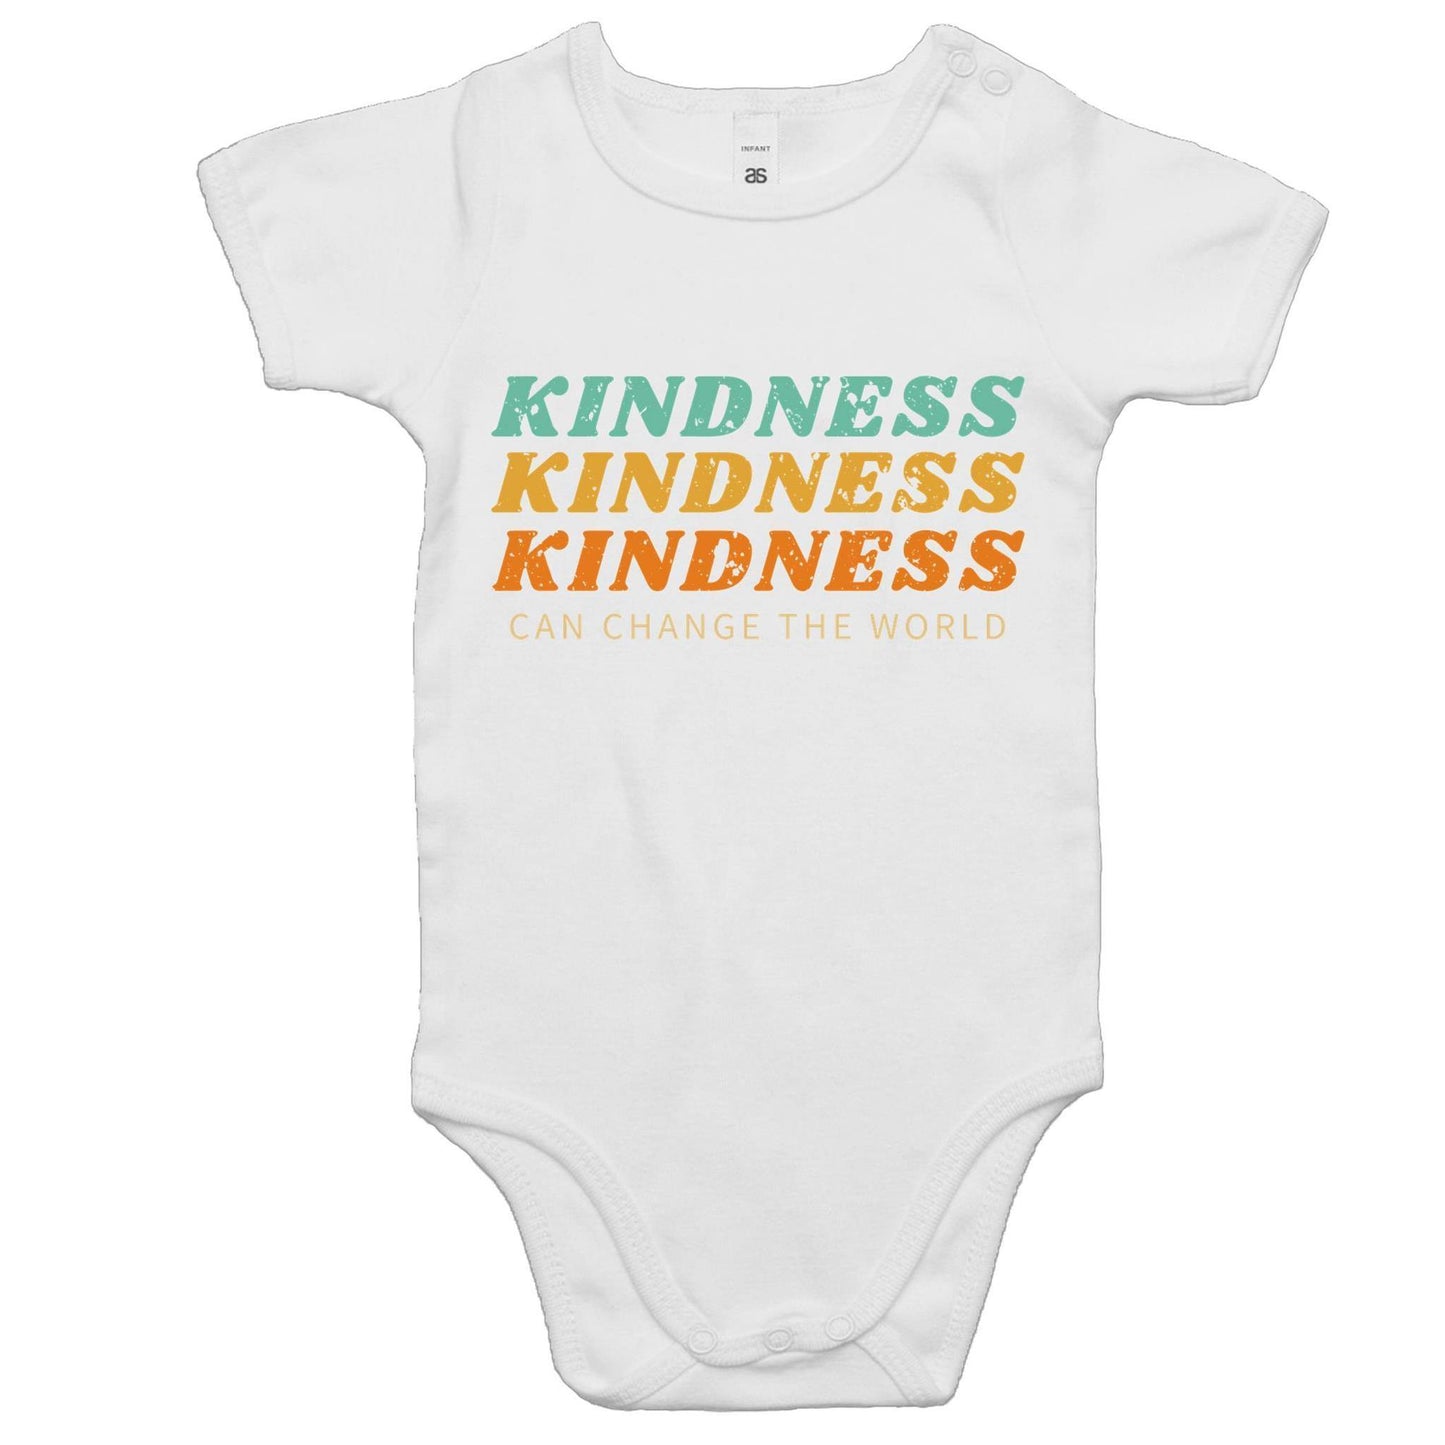 Kindness Can Change The World - Baby Bodysuit White Baby Bodysuit kids Retro